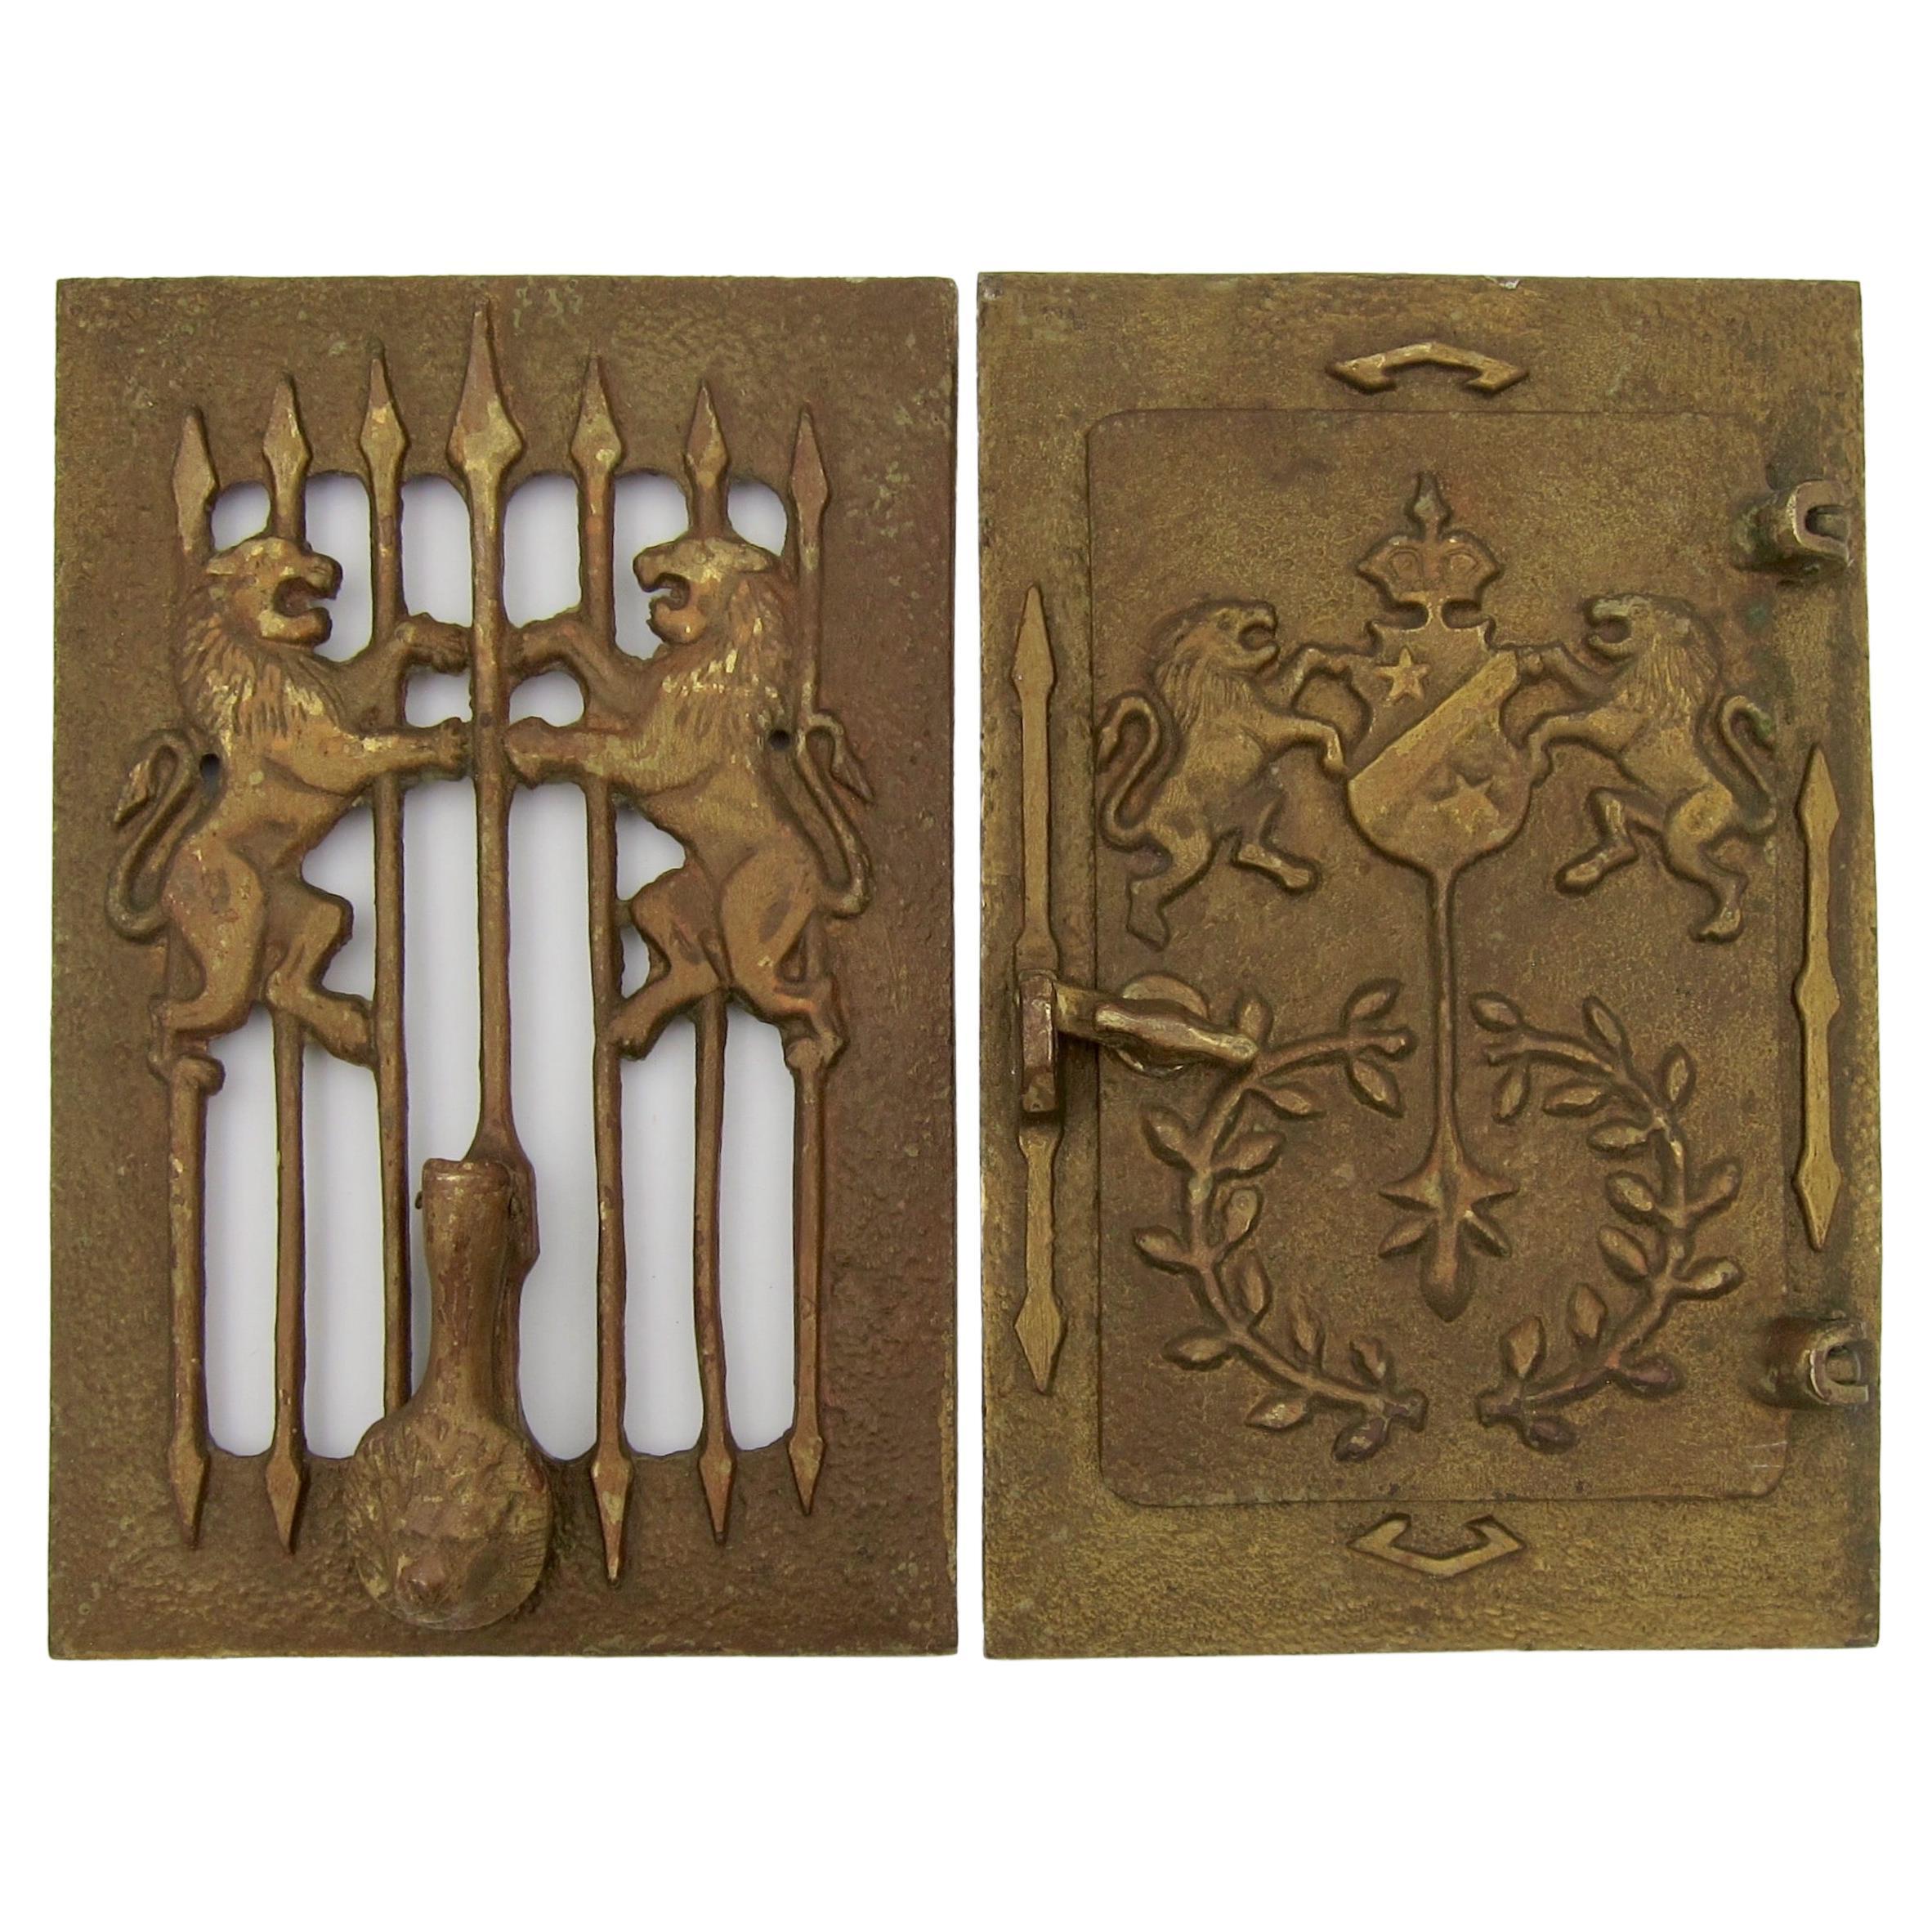 Vintage Speakeasy Door Knocker and Peephole Grill in Two Panels